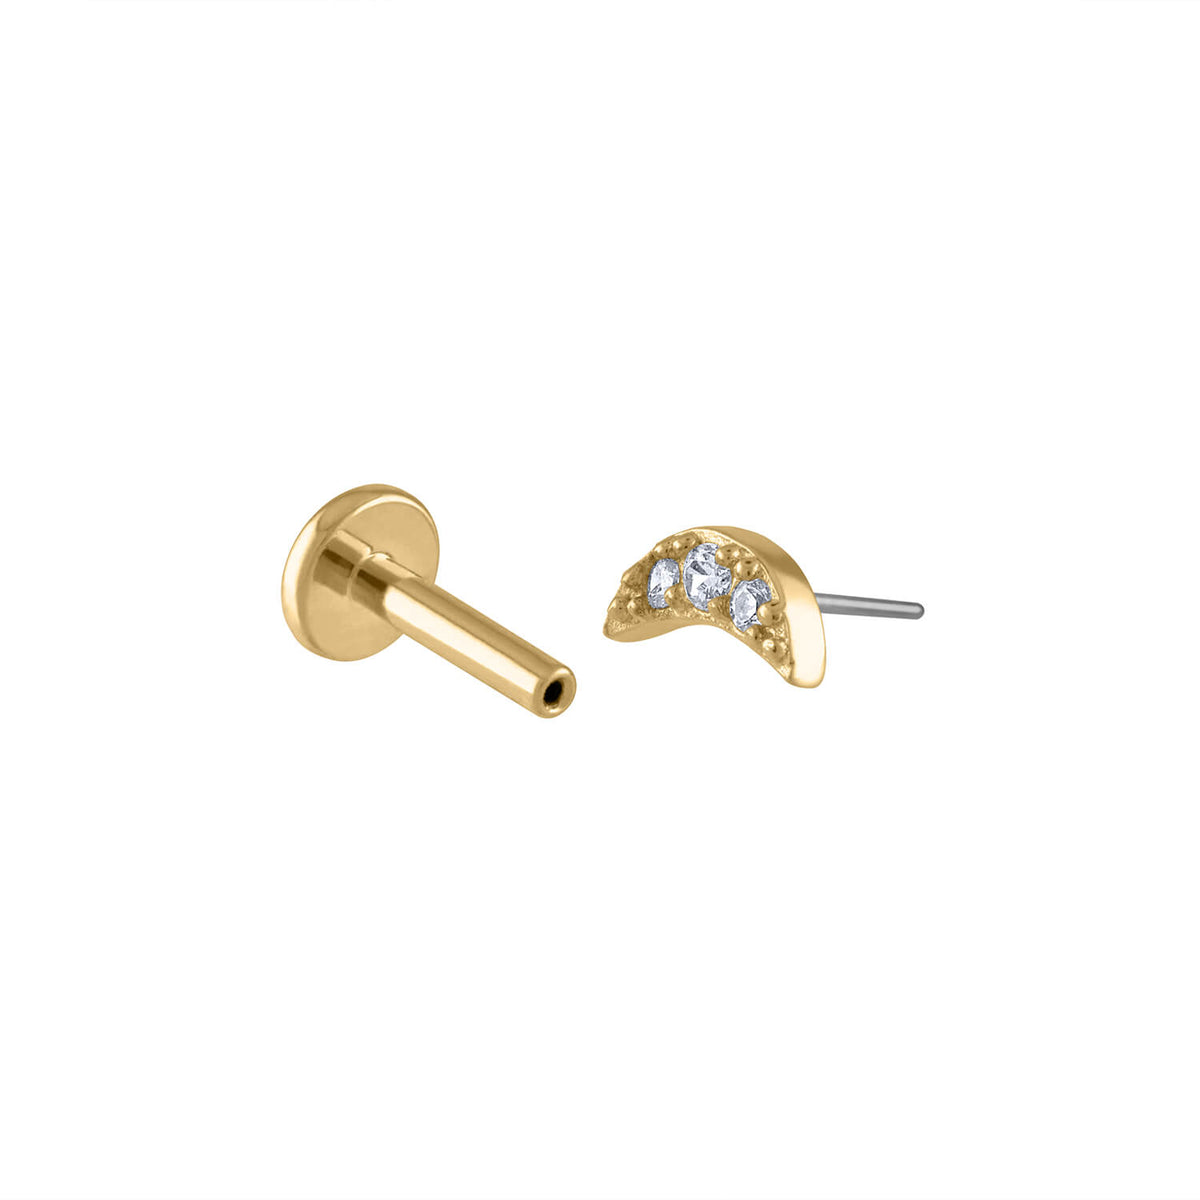 Gold Vermeil Crescent Moon Stud Earrings | Midori Jewelry Co. Pair / 8 mm